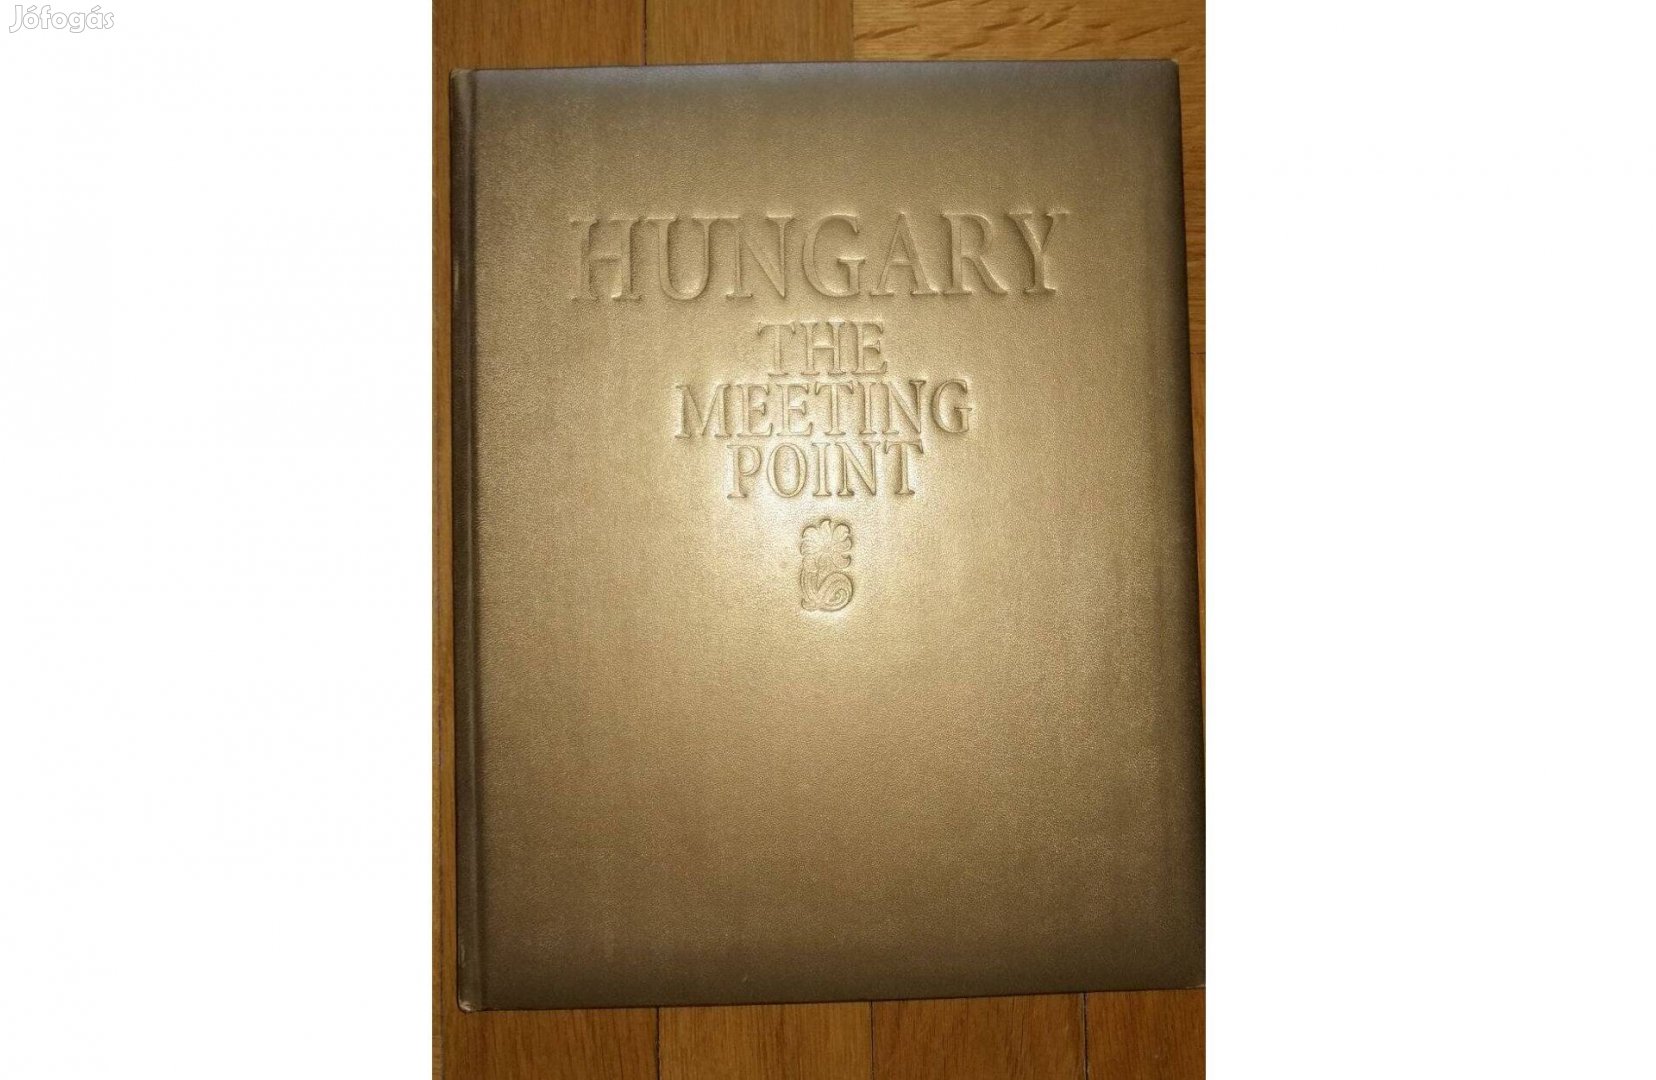 Eladó Hungary The Meeting Point könyv!